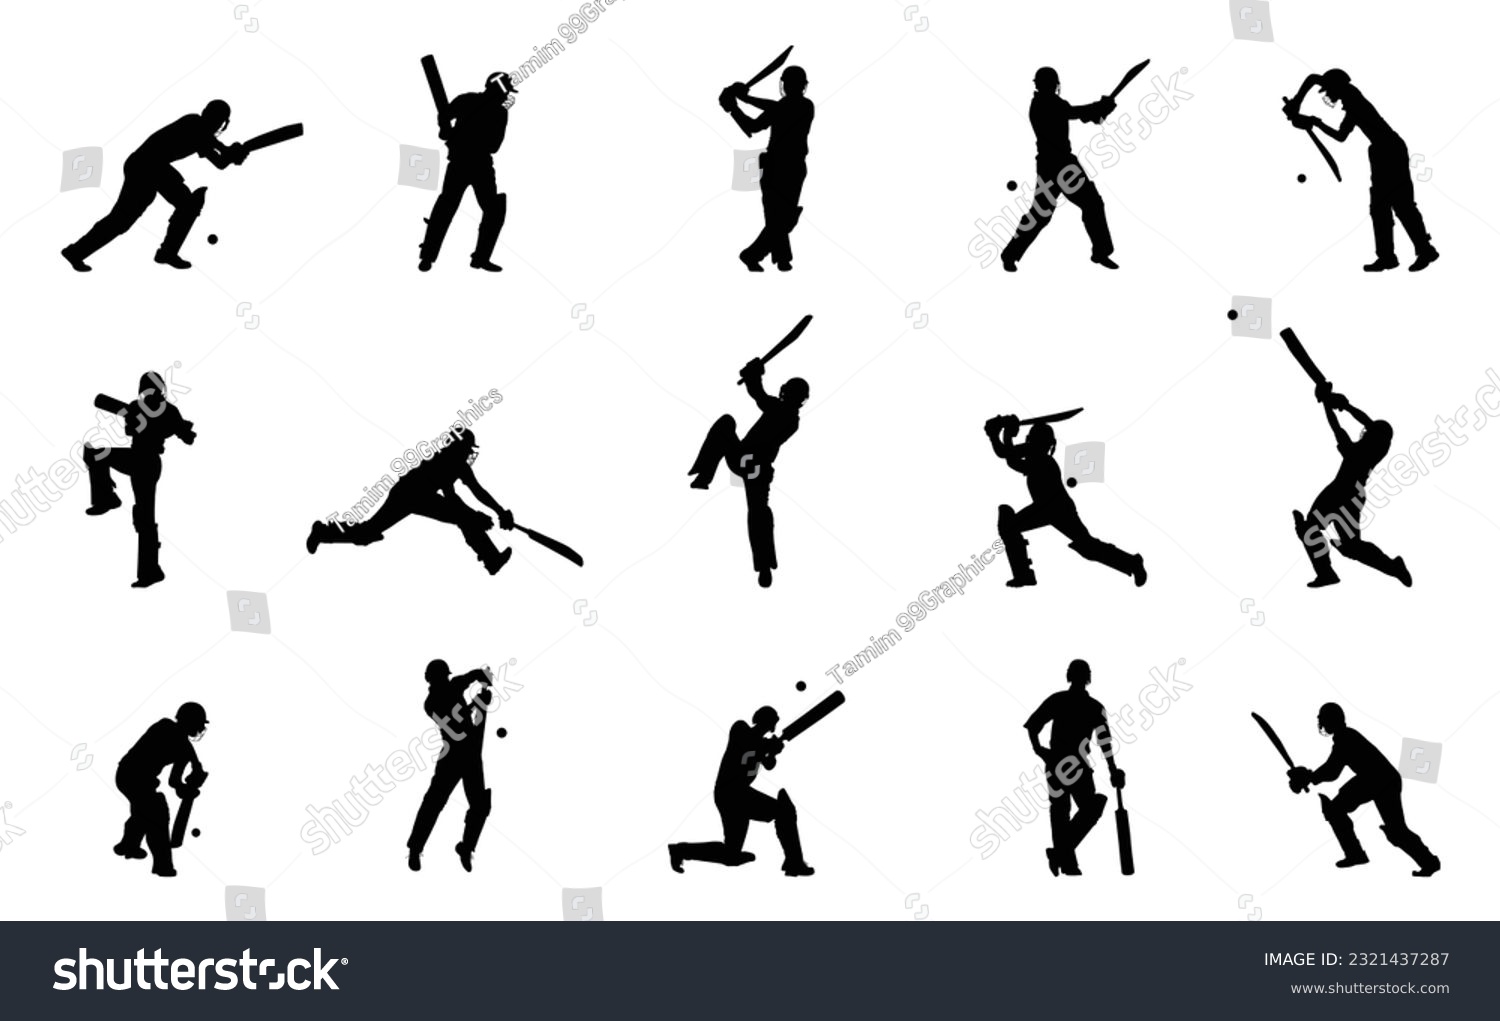 SVG of Cricket player silhouette, men's cricket batsman and male cricket player silhouette on white background. svg